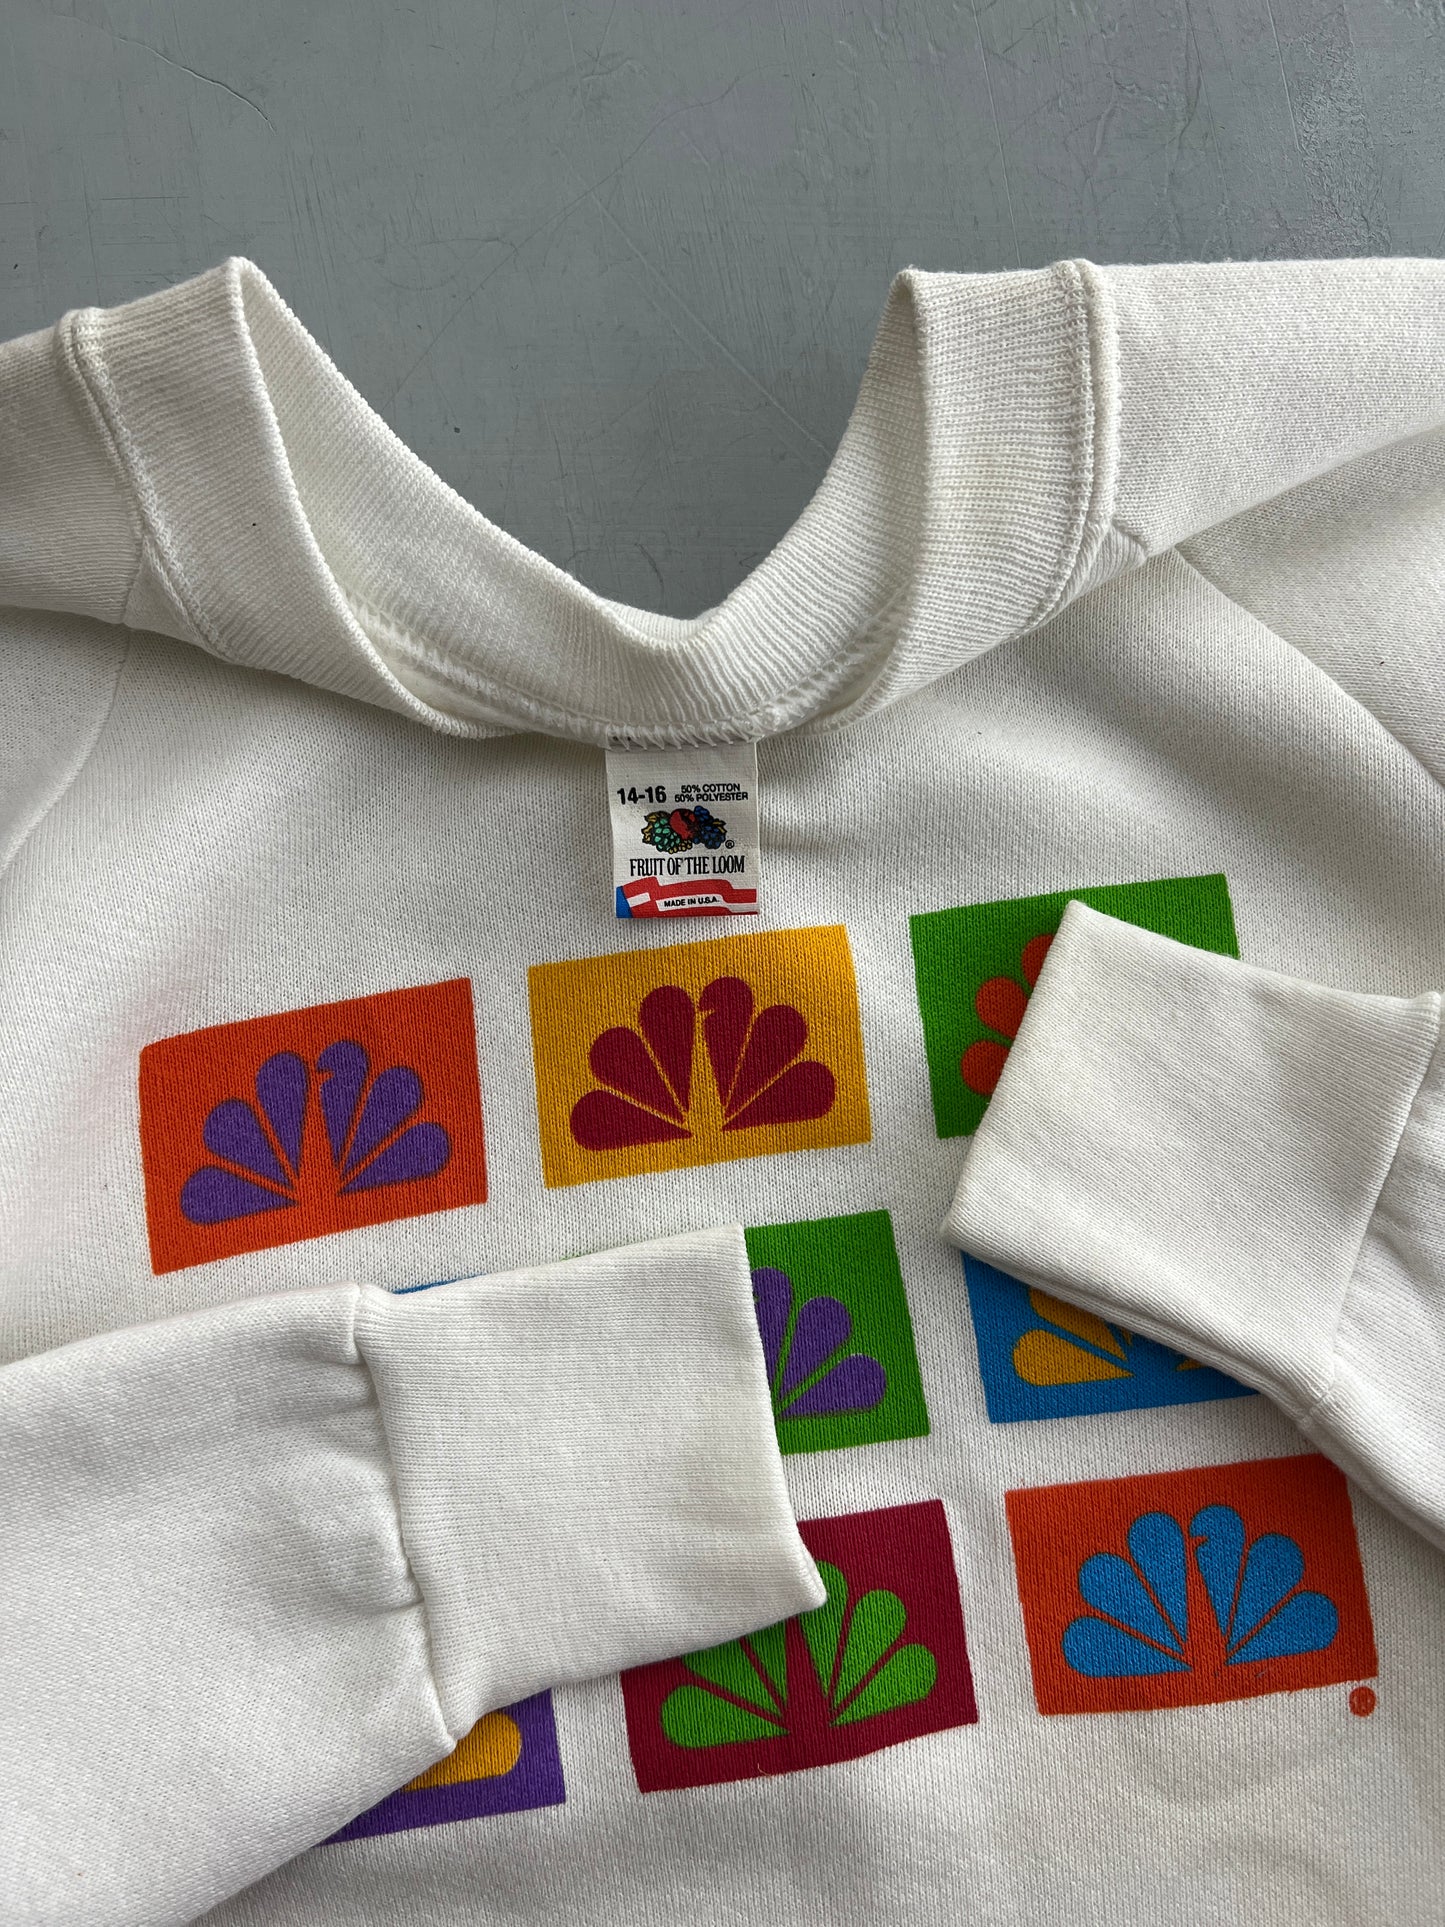 NBC Peacock Sweatshirt [S]